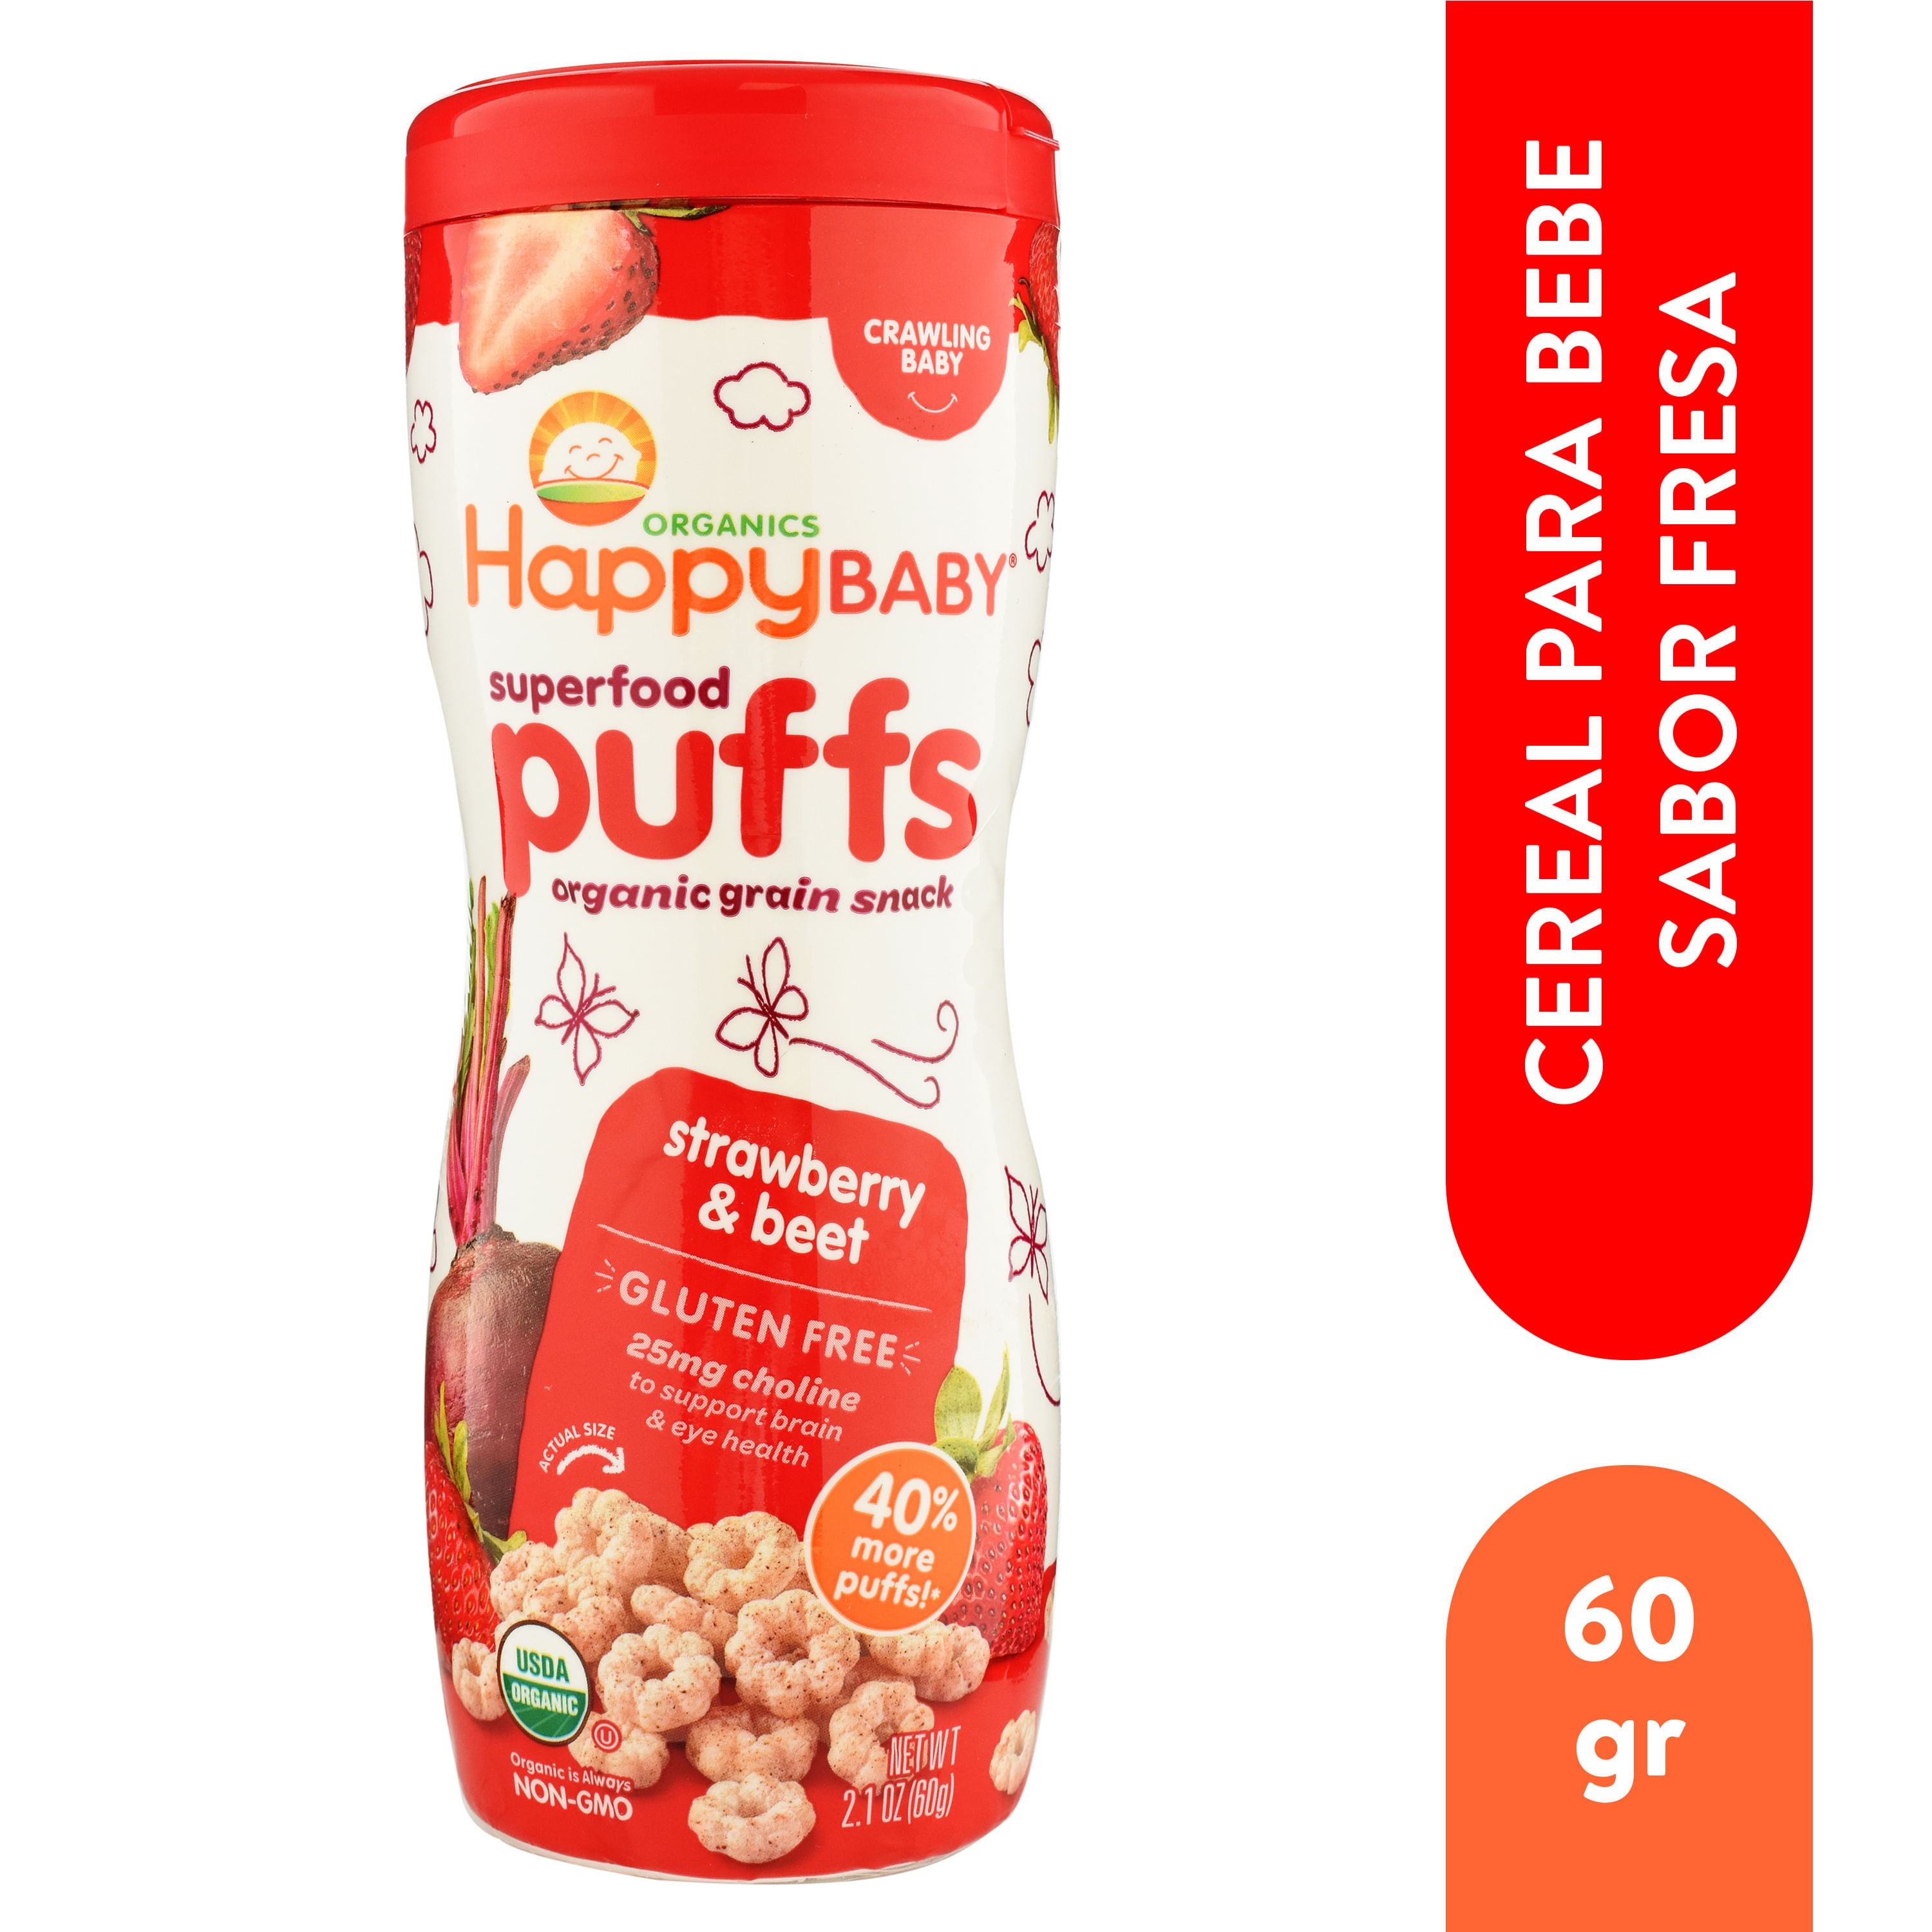 Comprar Galletitas NutriPuffs Gerber® Sabor Fresa Banano Sin Azúcar - 42g